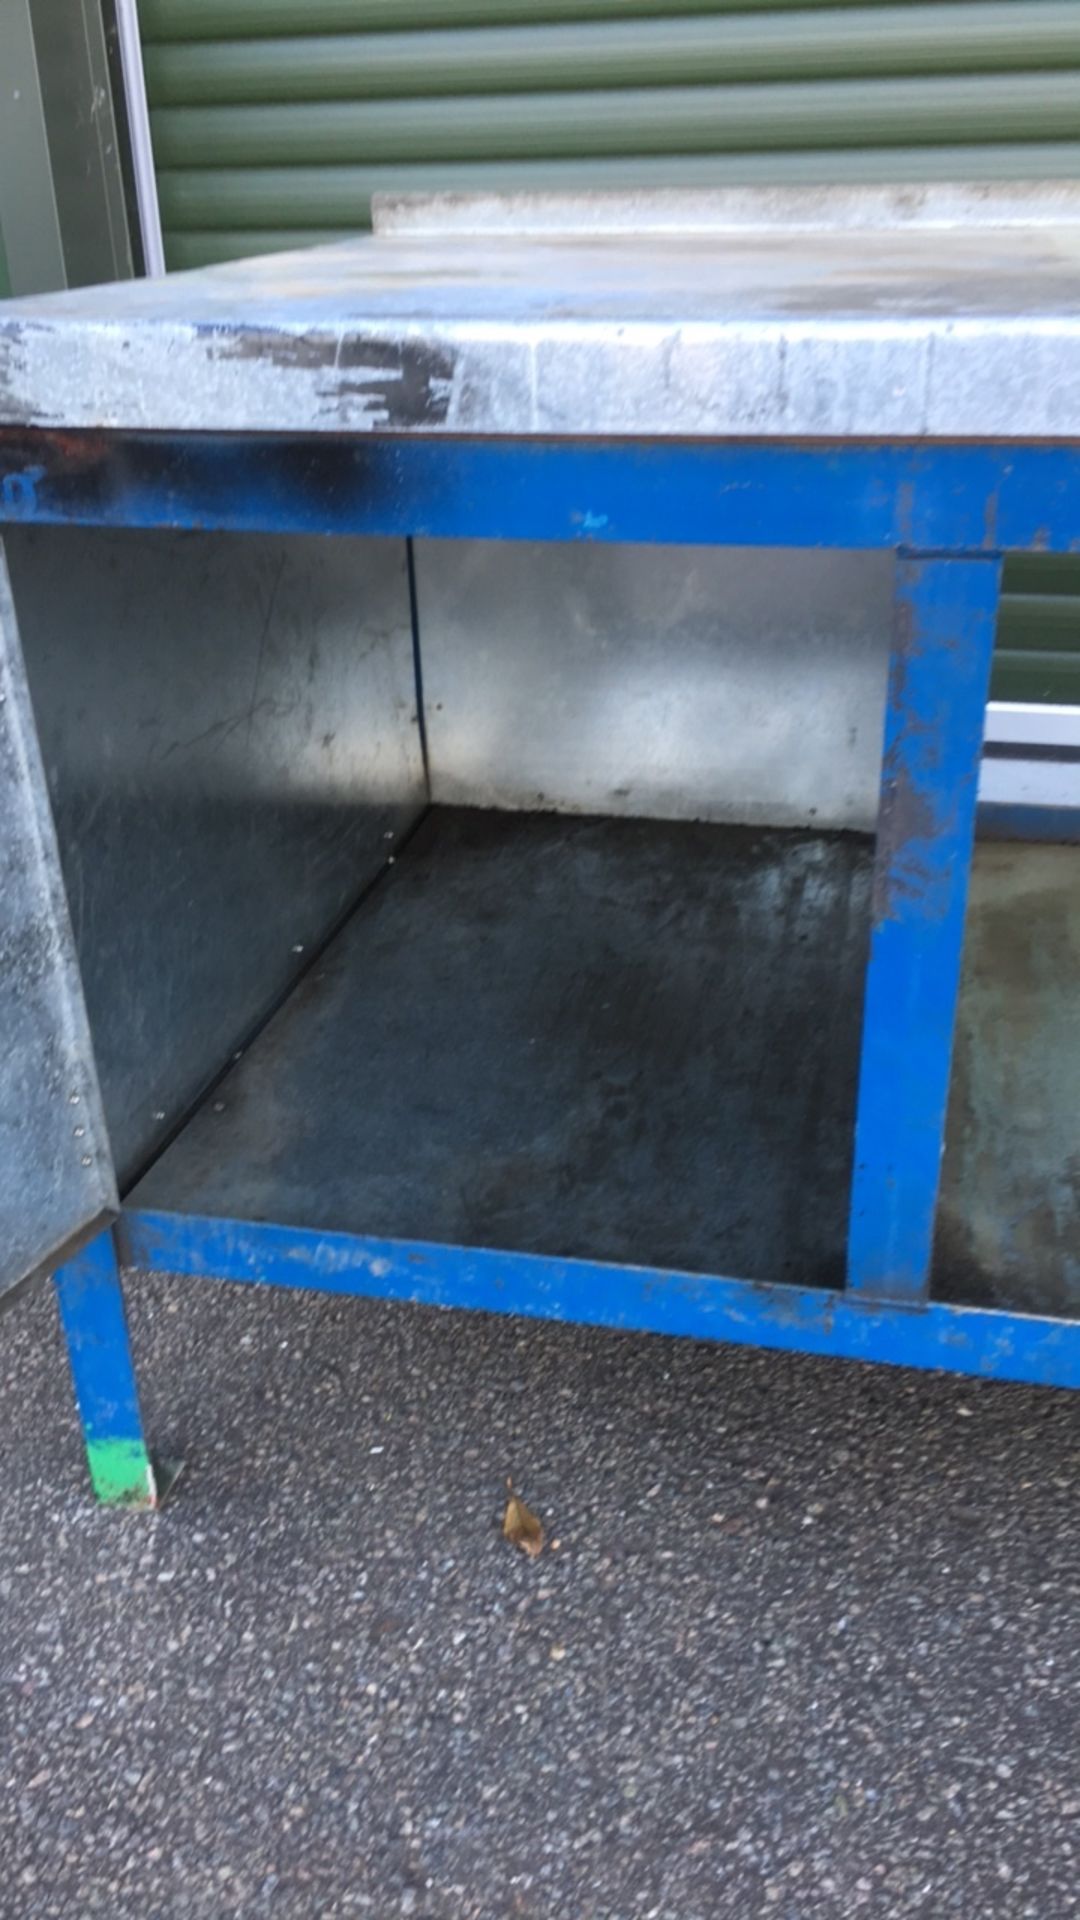 Bench Master Ltd Steel framed work bench with locker - Image 3 of 3